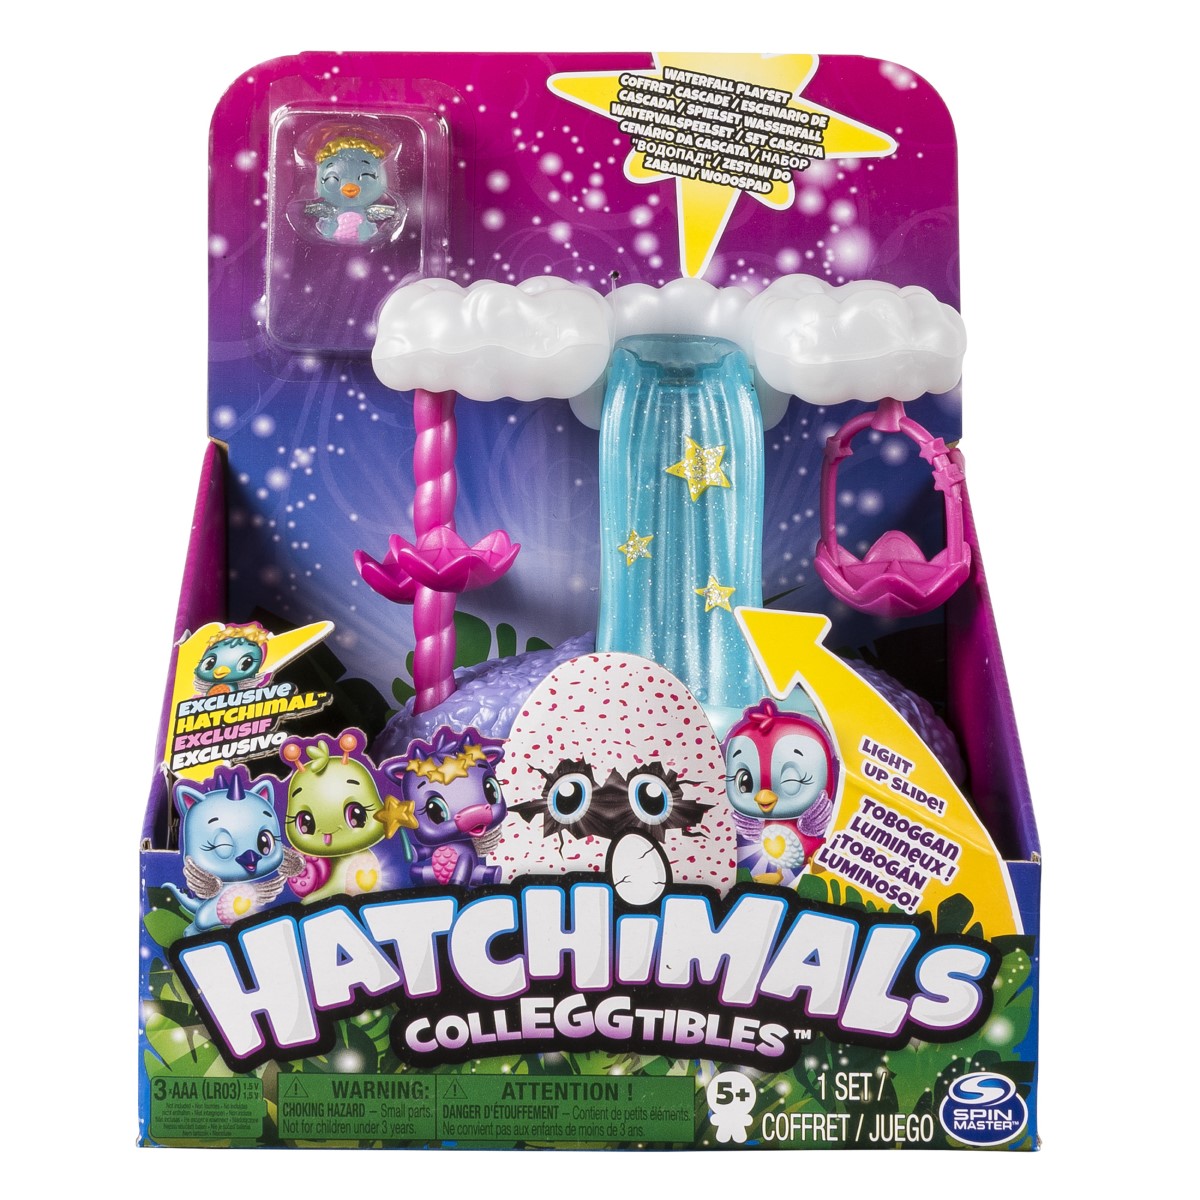 Hatchimals Colleggtibles Wishing Star Waterfall Playset